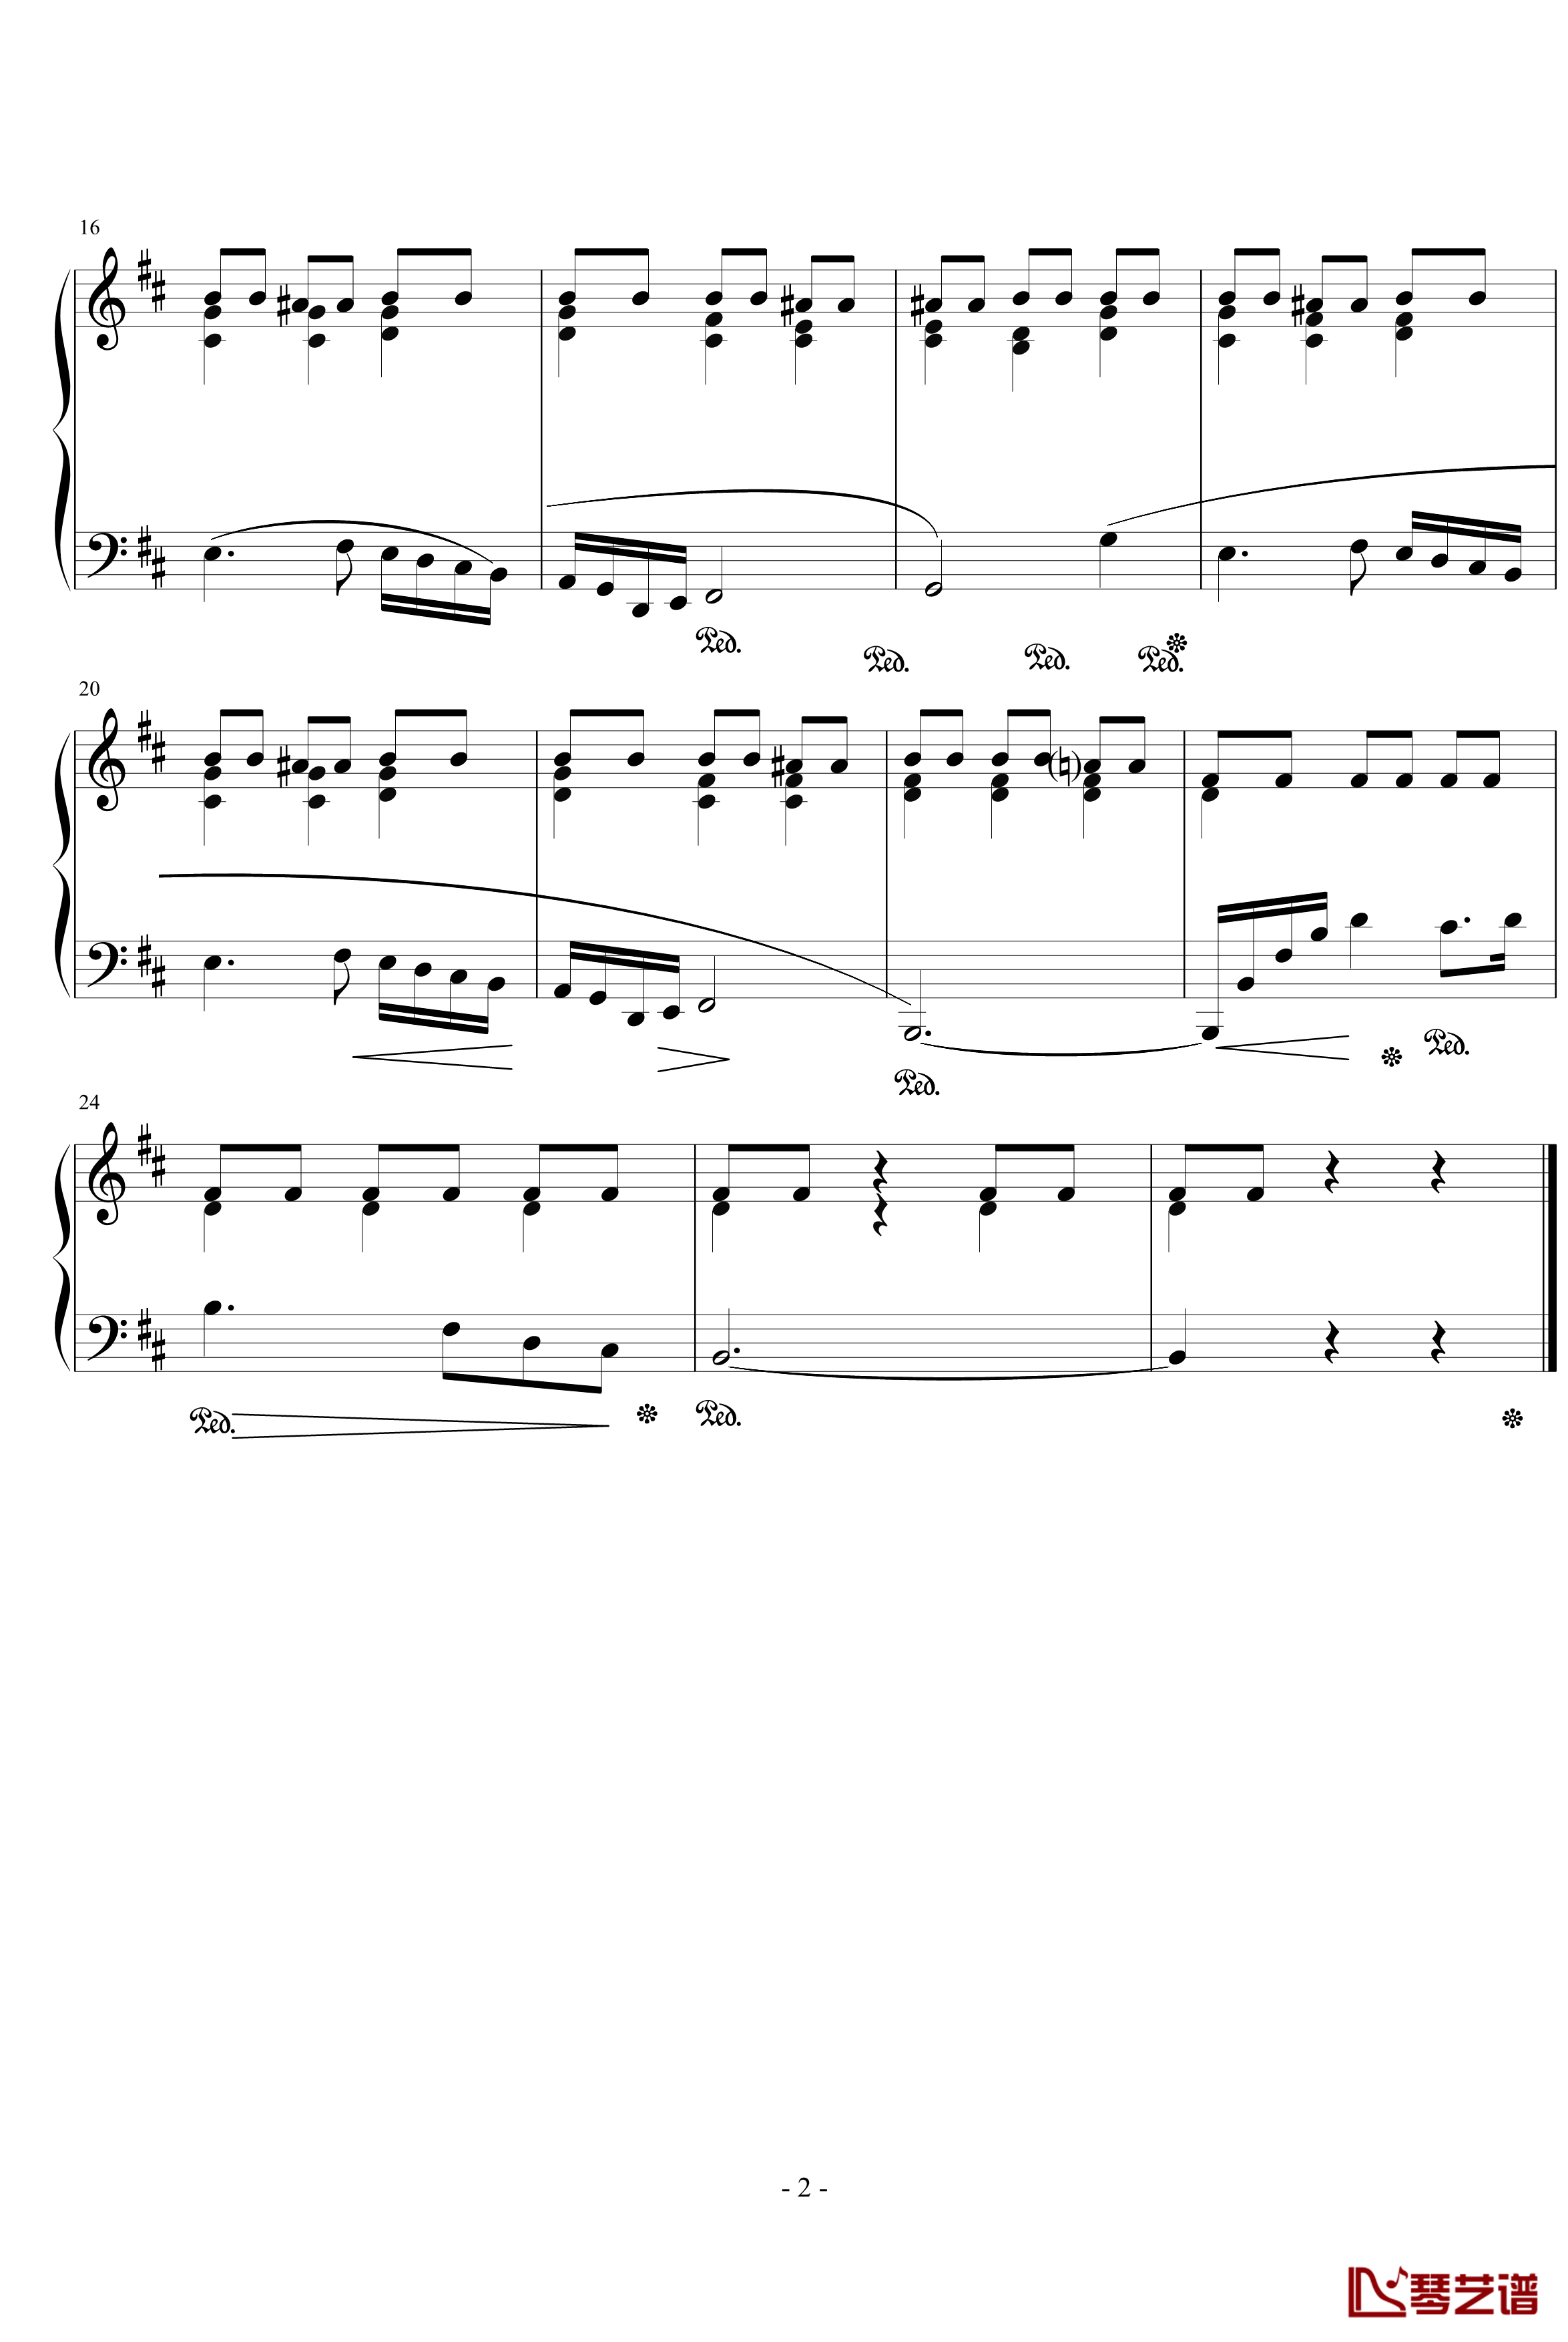 b小调前奏曲钢琴谱-肖邦-chopin